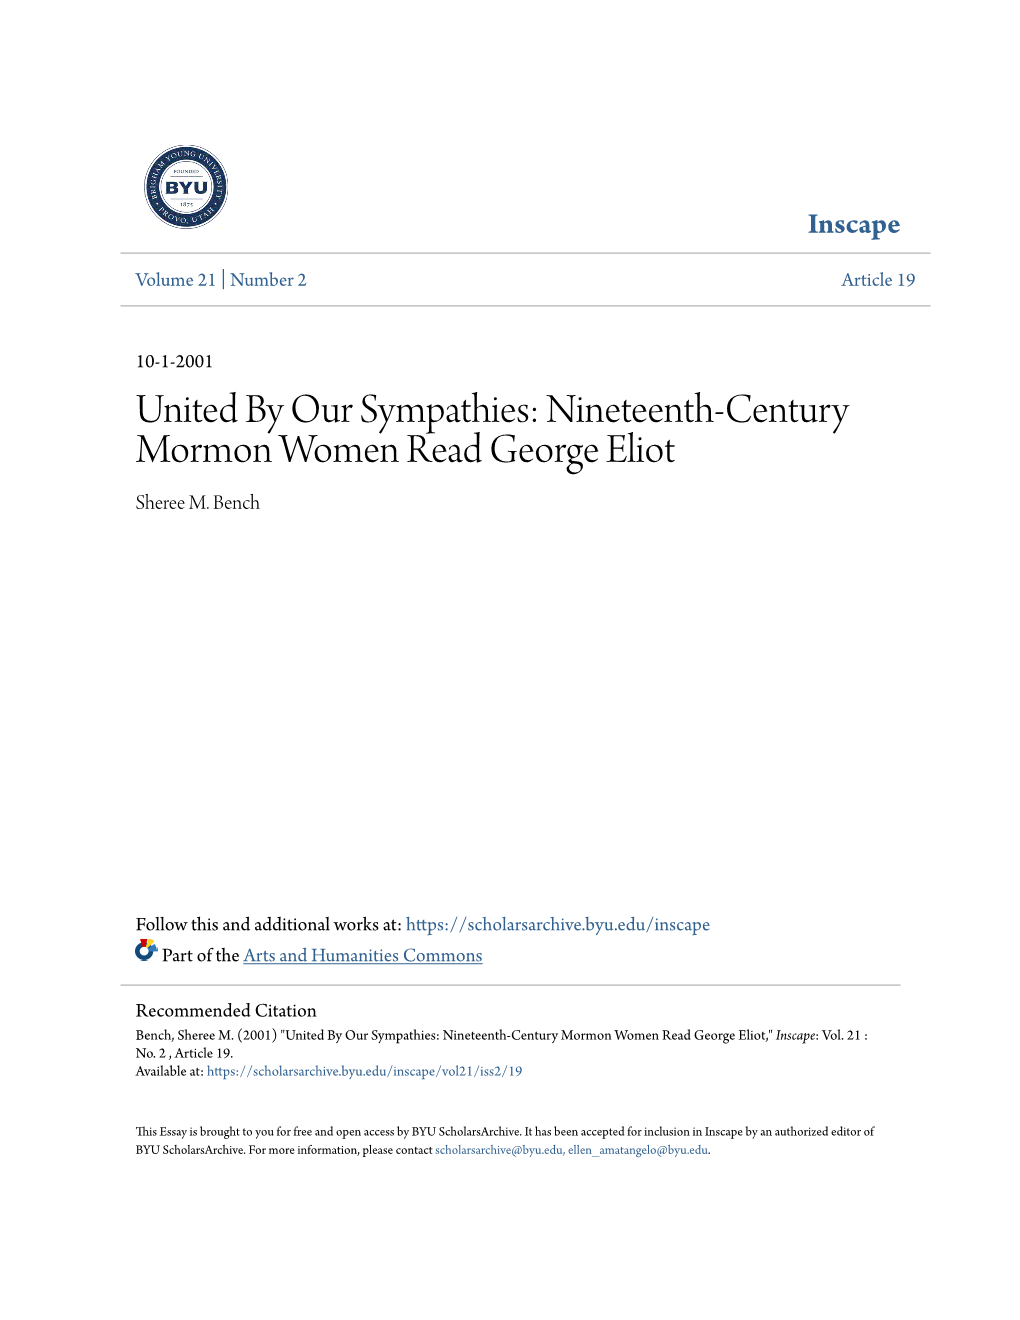 Nineteenth-Century Mormon Women Read George Eliot Sheree M